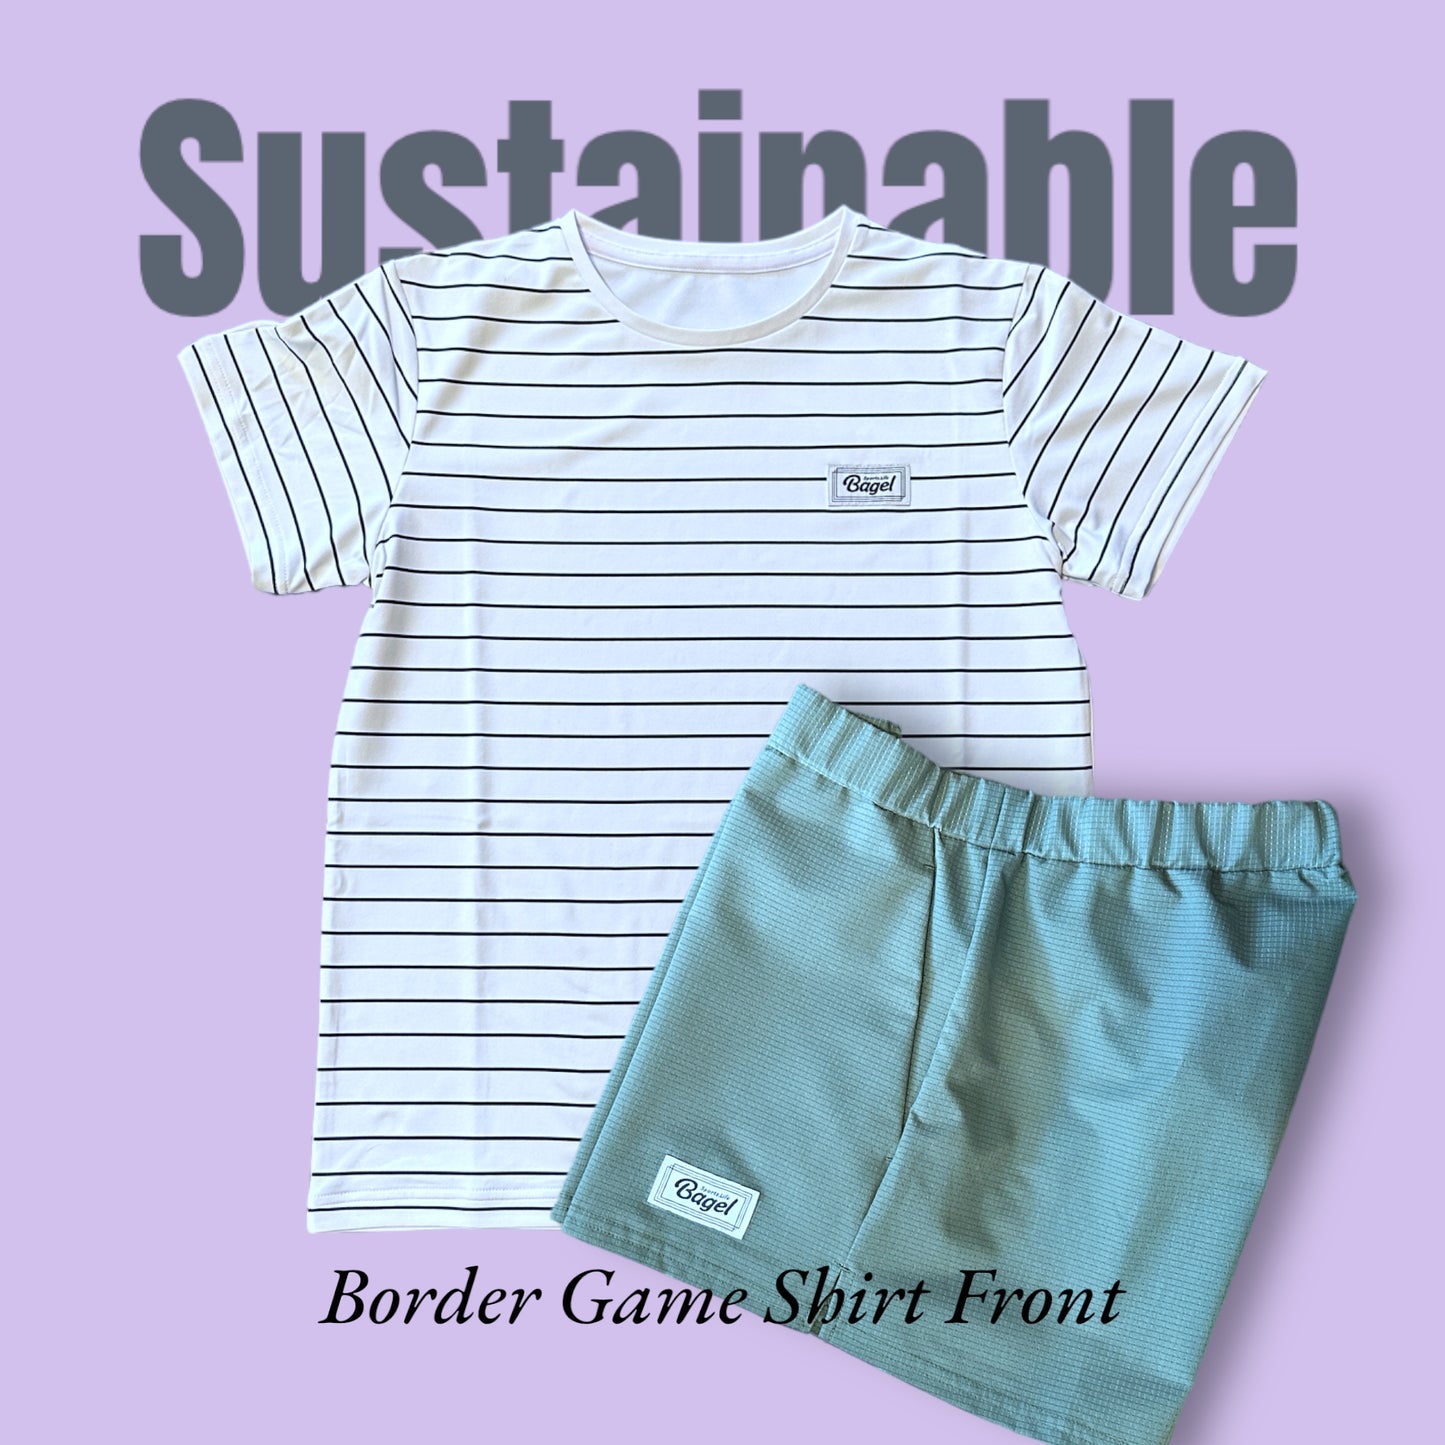 LADIES Sustainable Border F Game Shirt White